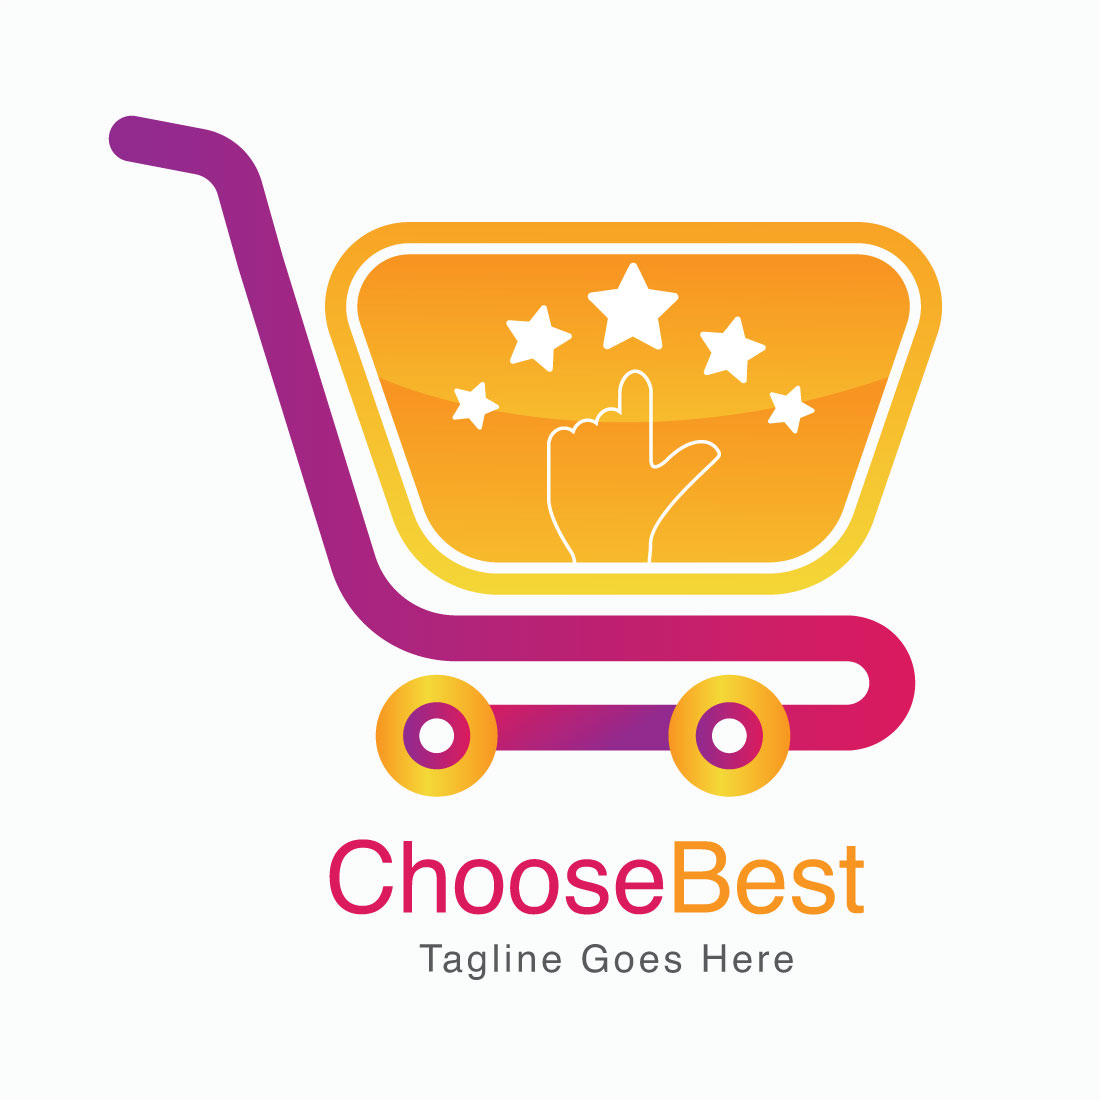 Shopping Cart Logo image cover.